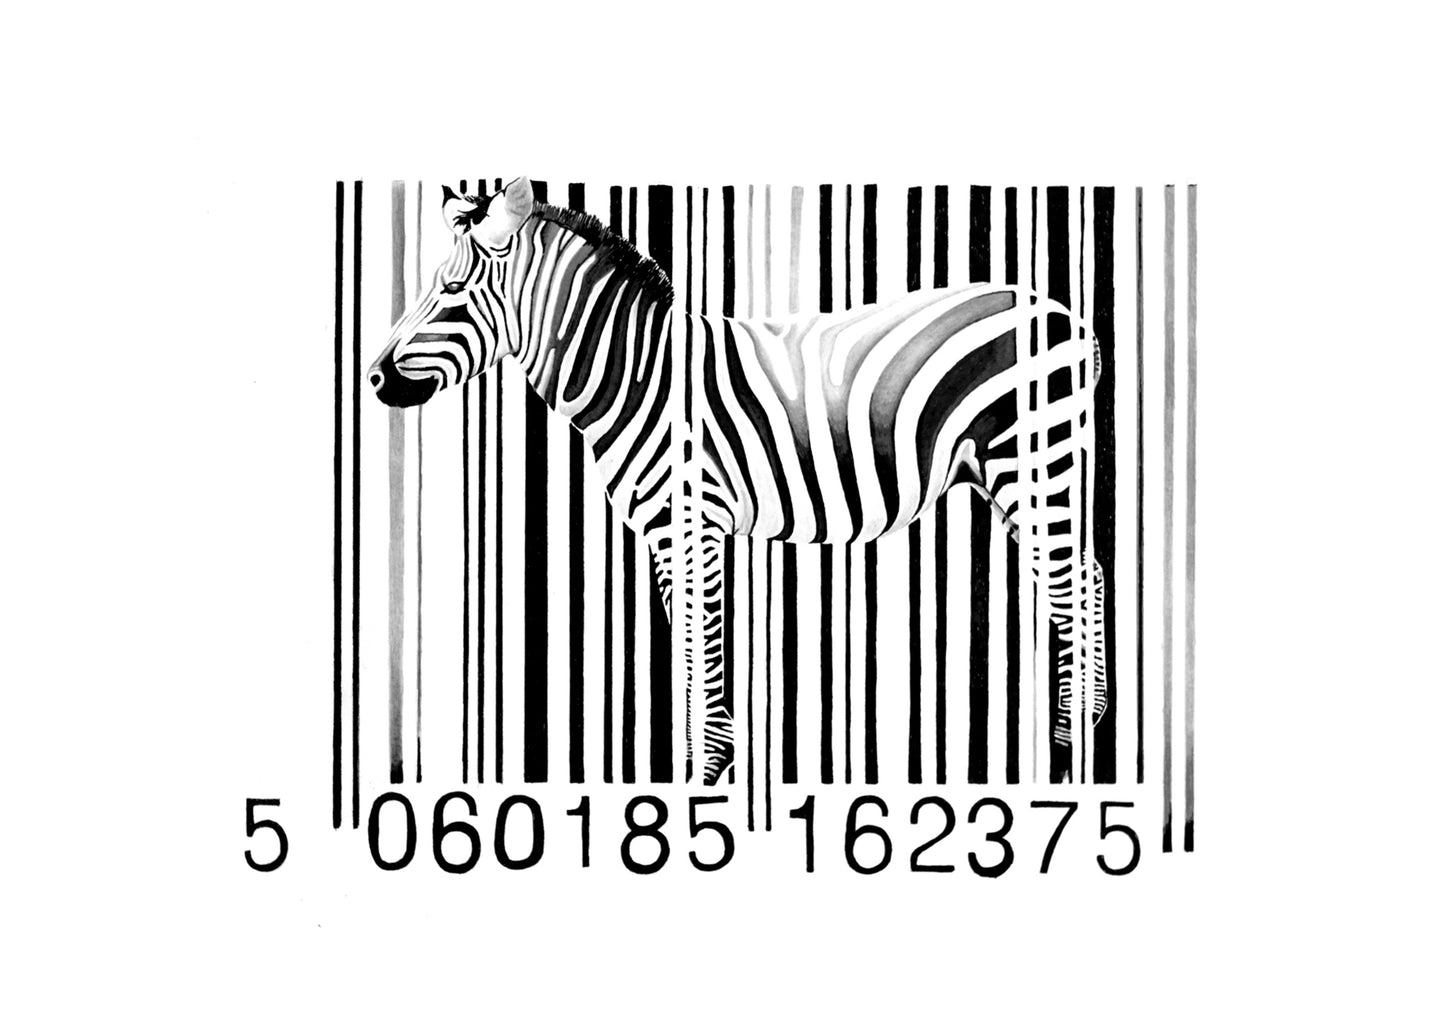 Zebra Barcode